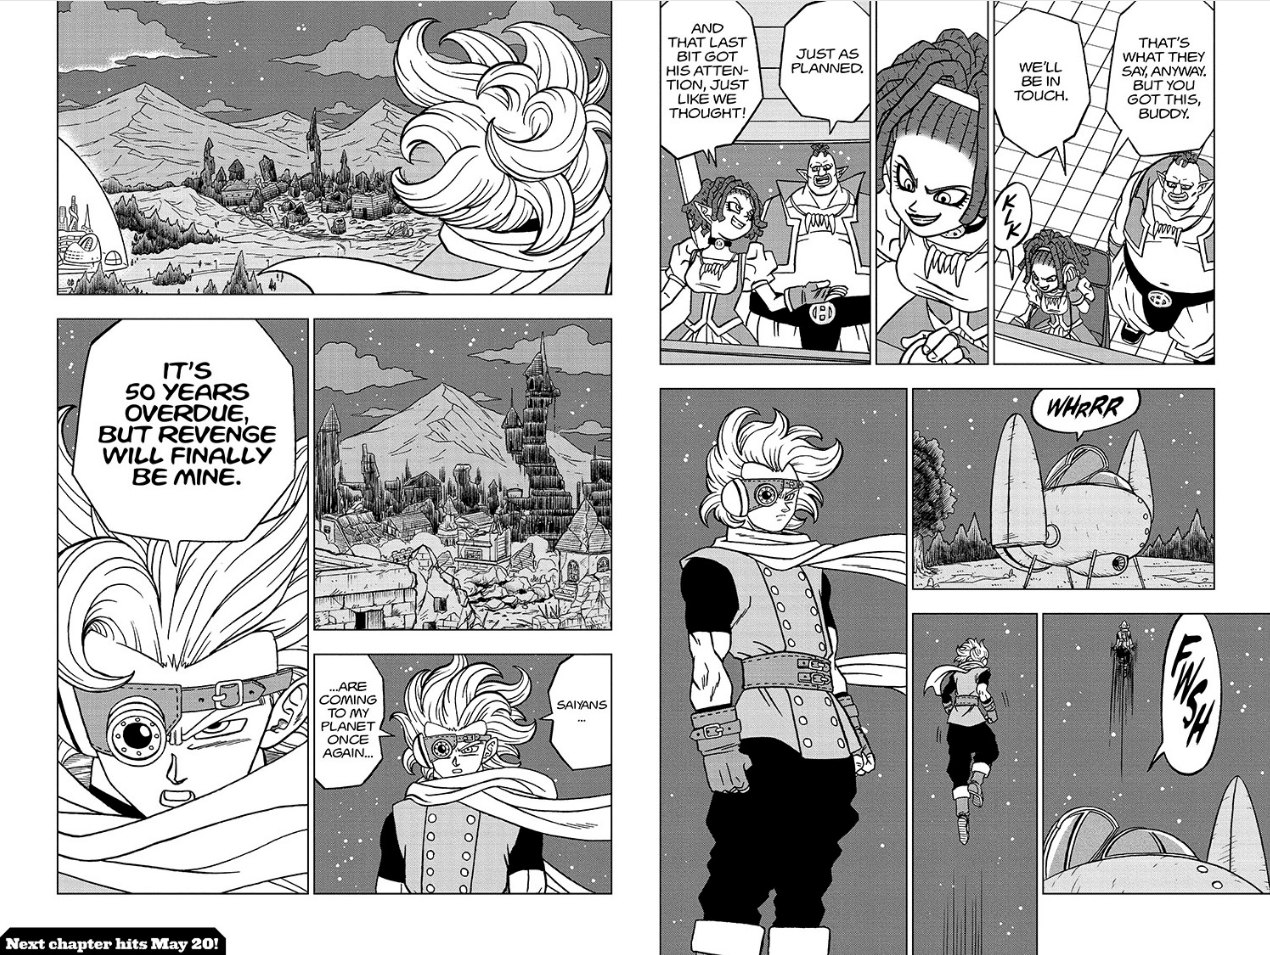 Dragon Ball Super Chapter 71 Vegeta Hakai Training - Comic Book Revolution